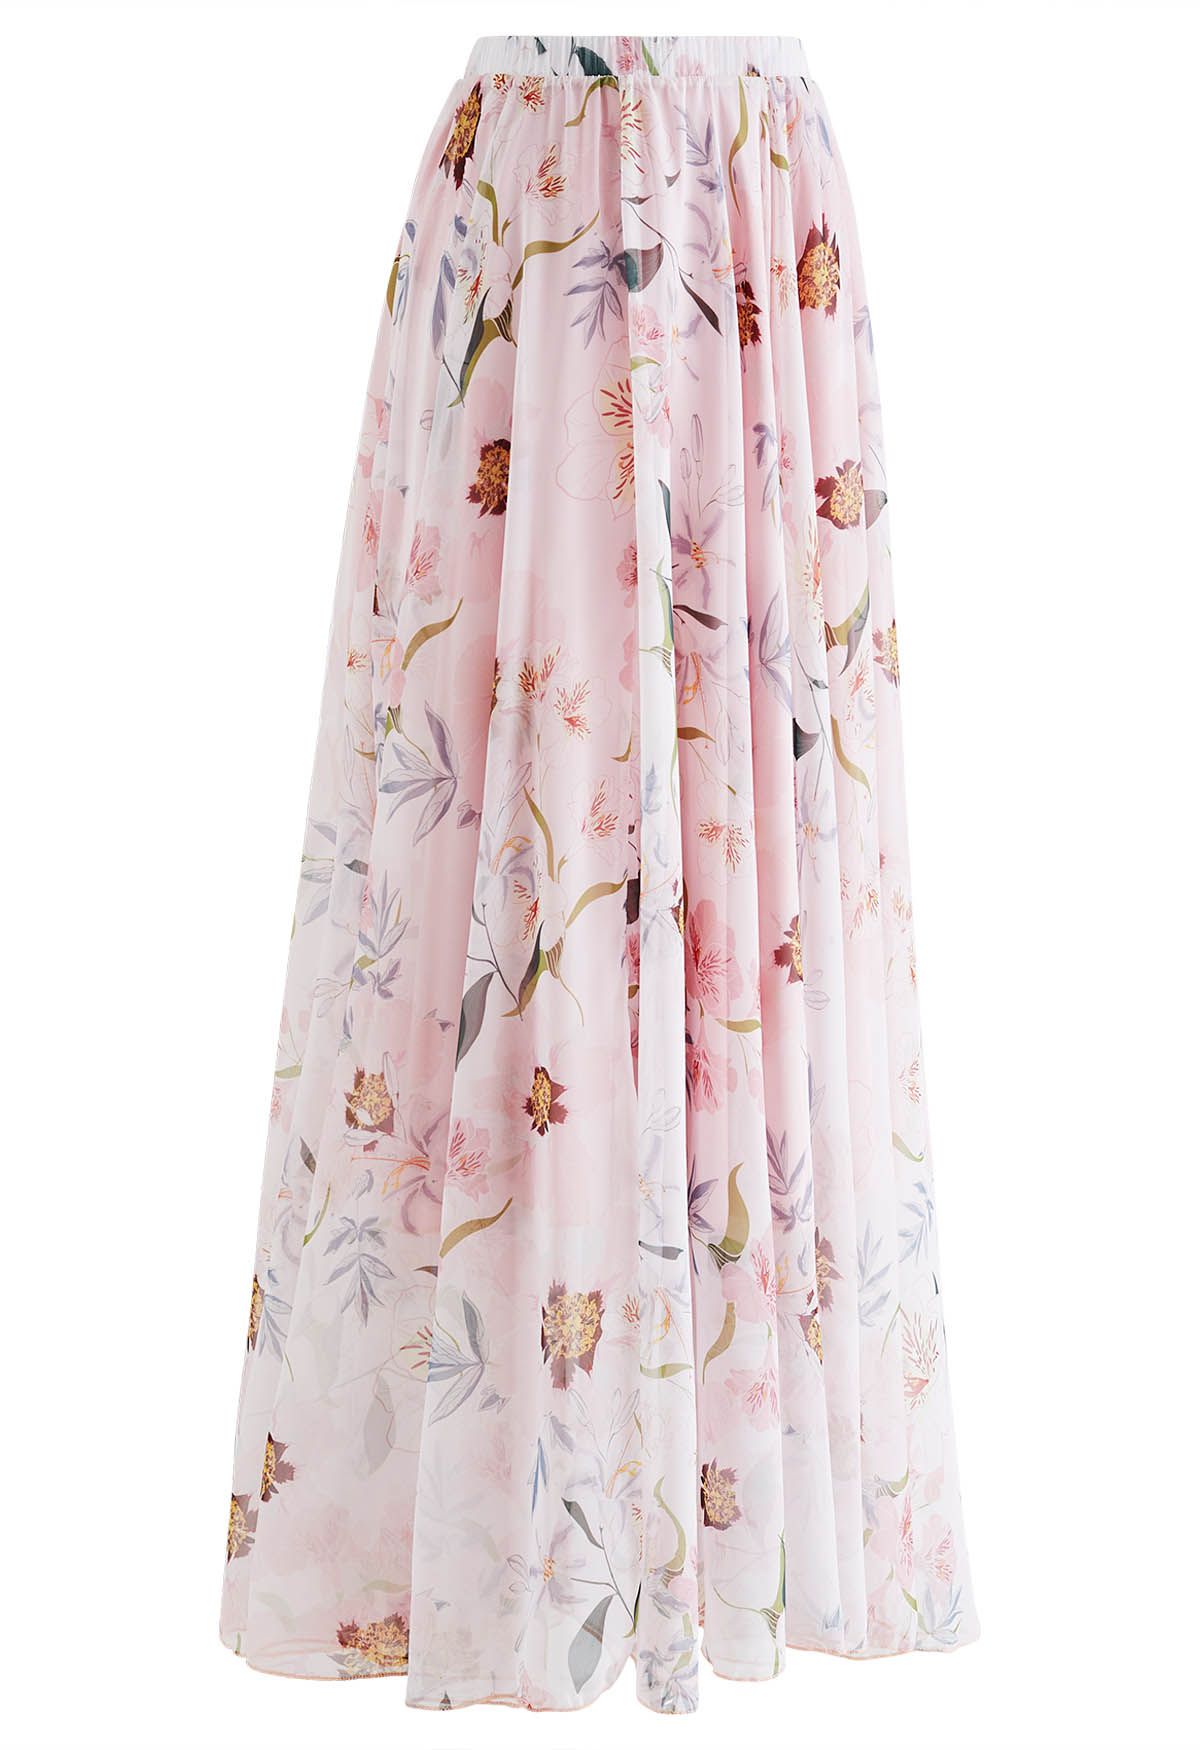 Blushing Blooms Chiffon Maxi Skirt - Retro, Indie and Unique Fashion